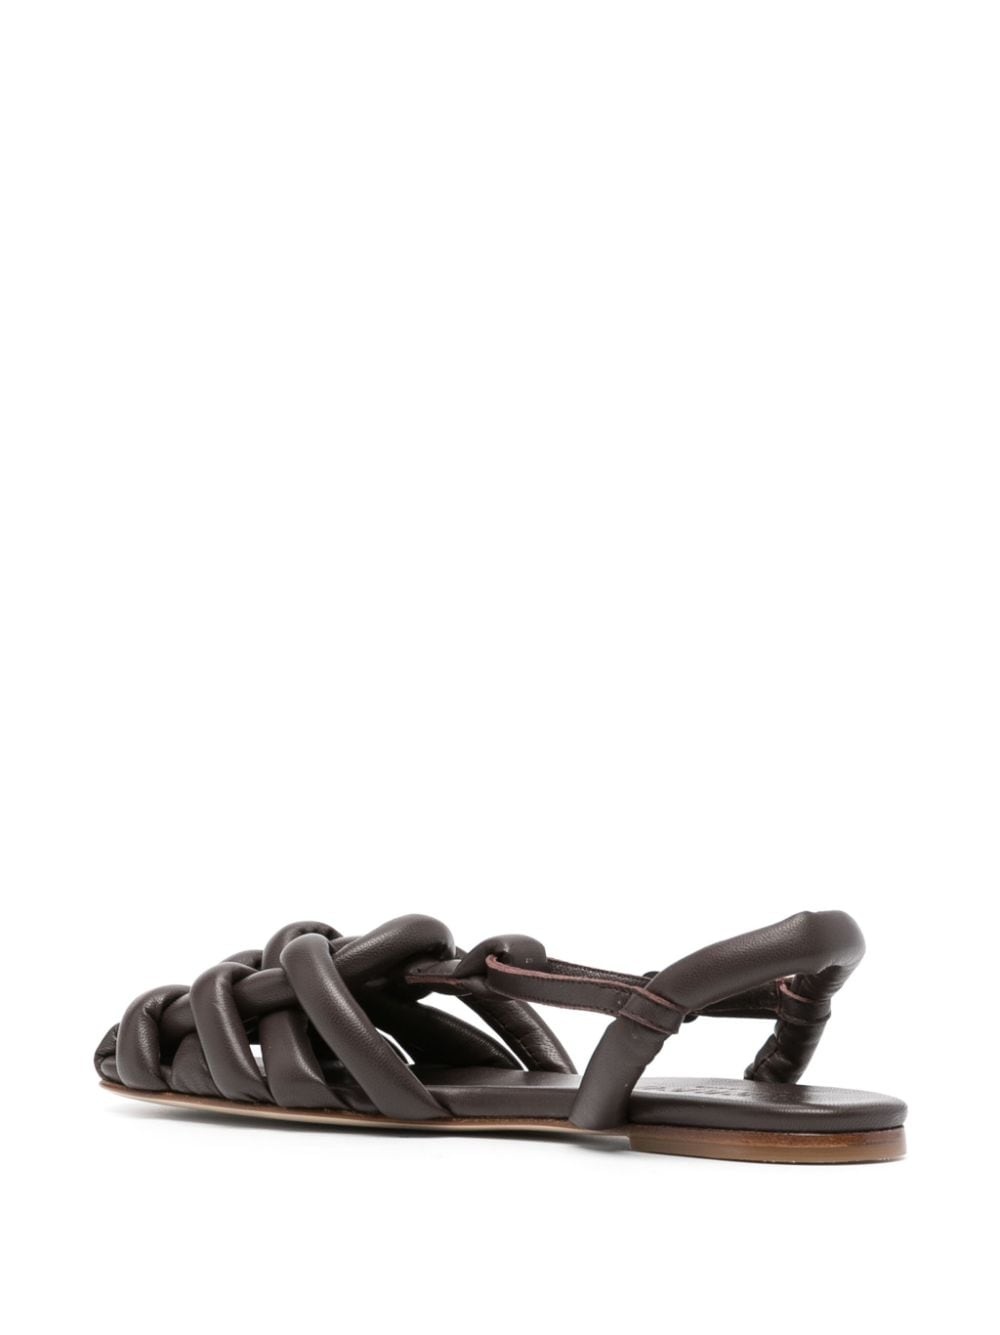 Cabersa pebbled leather sandals - 3